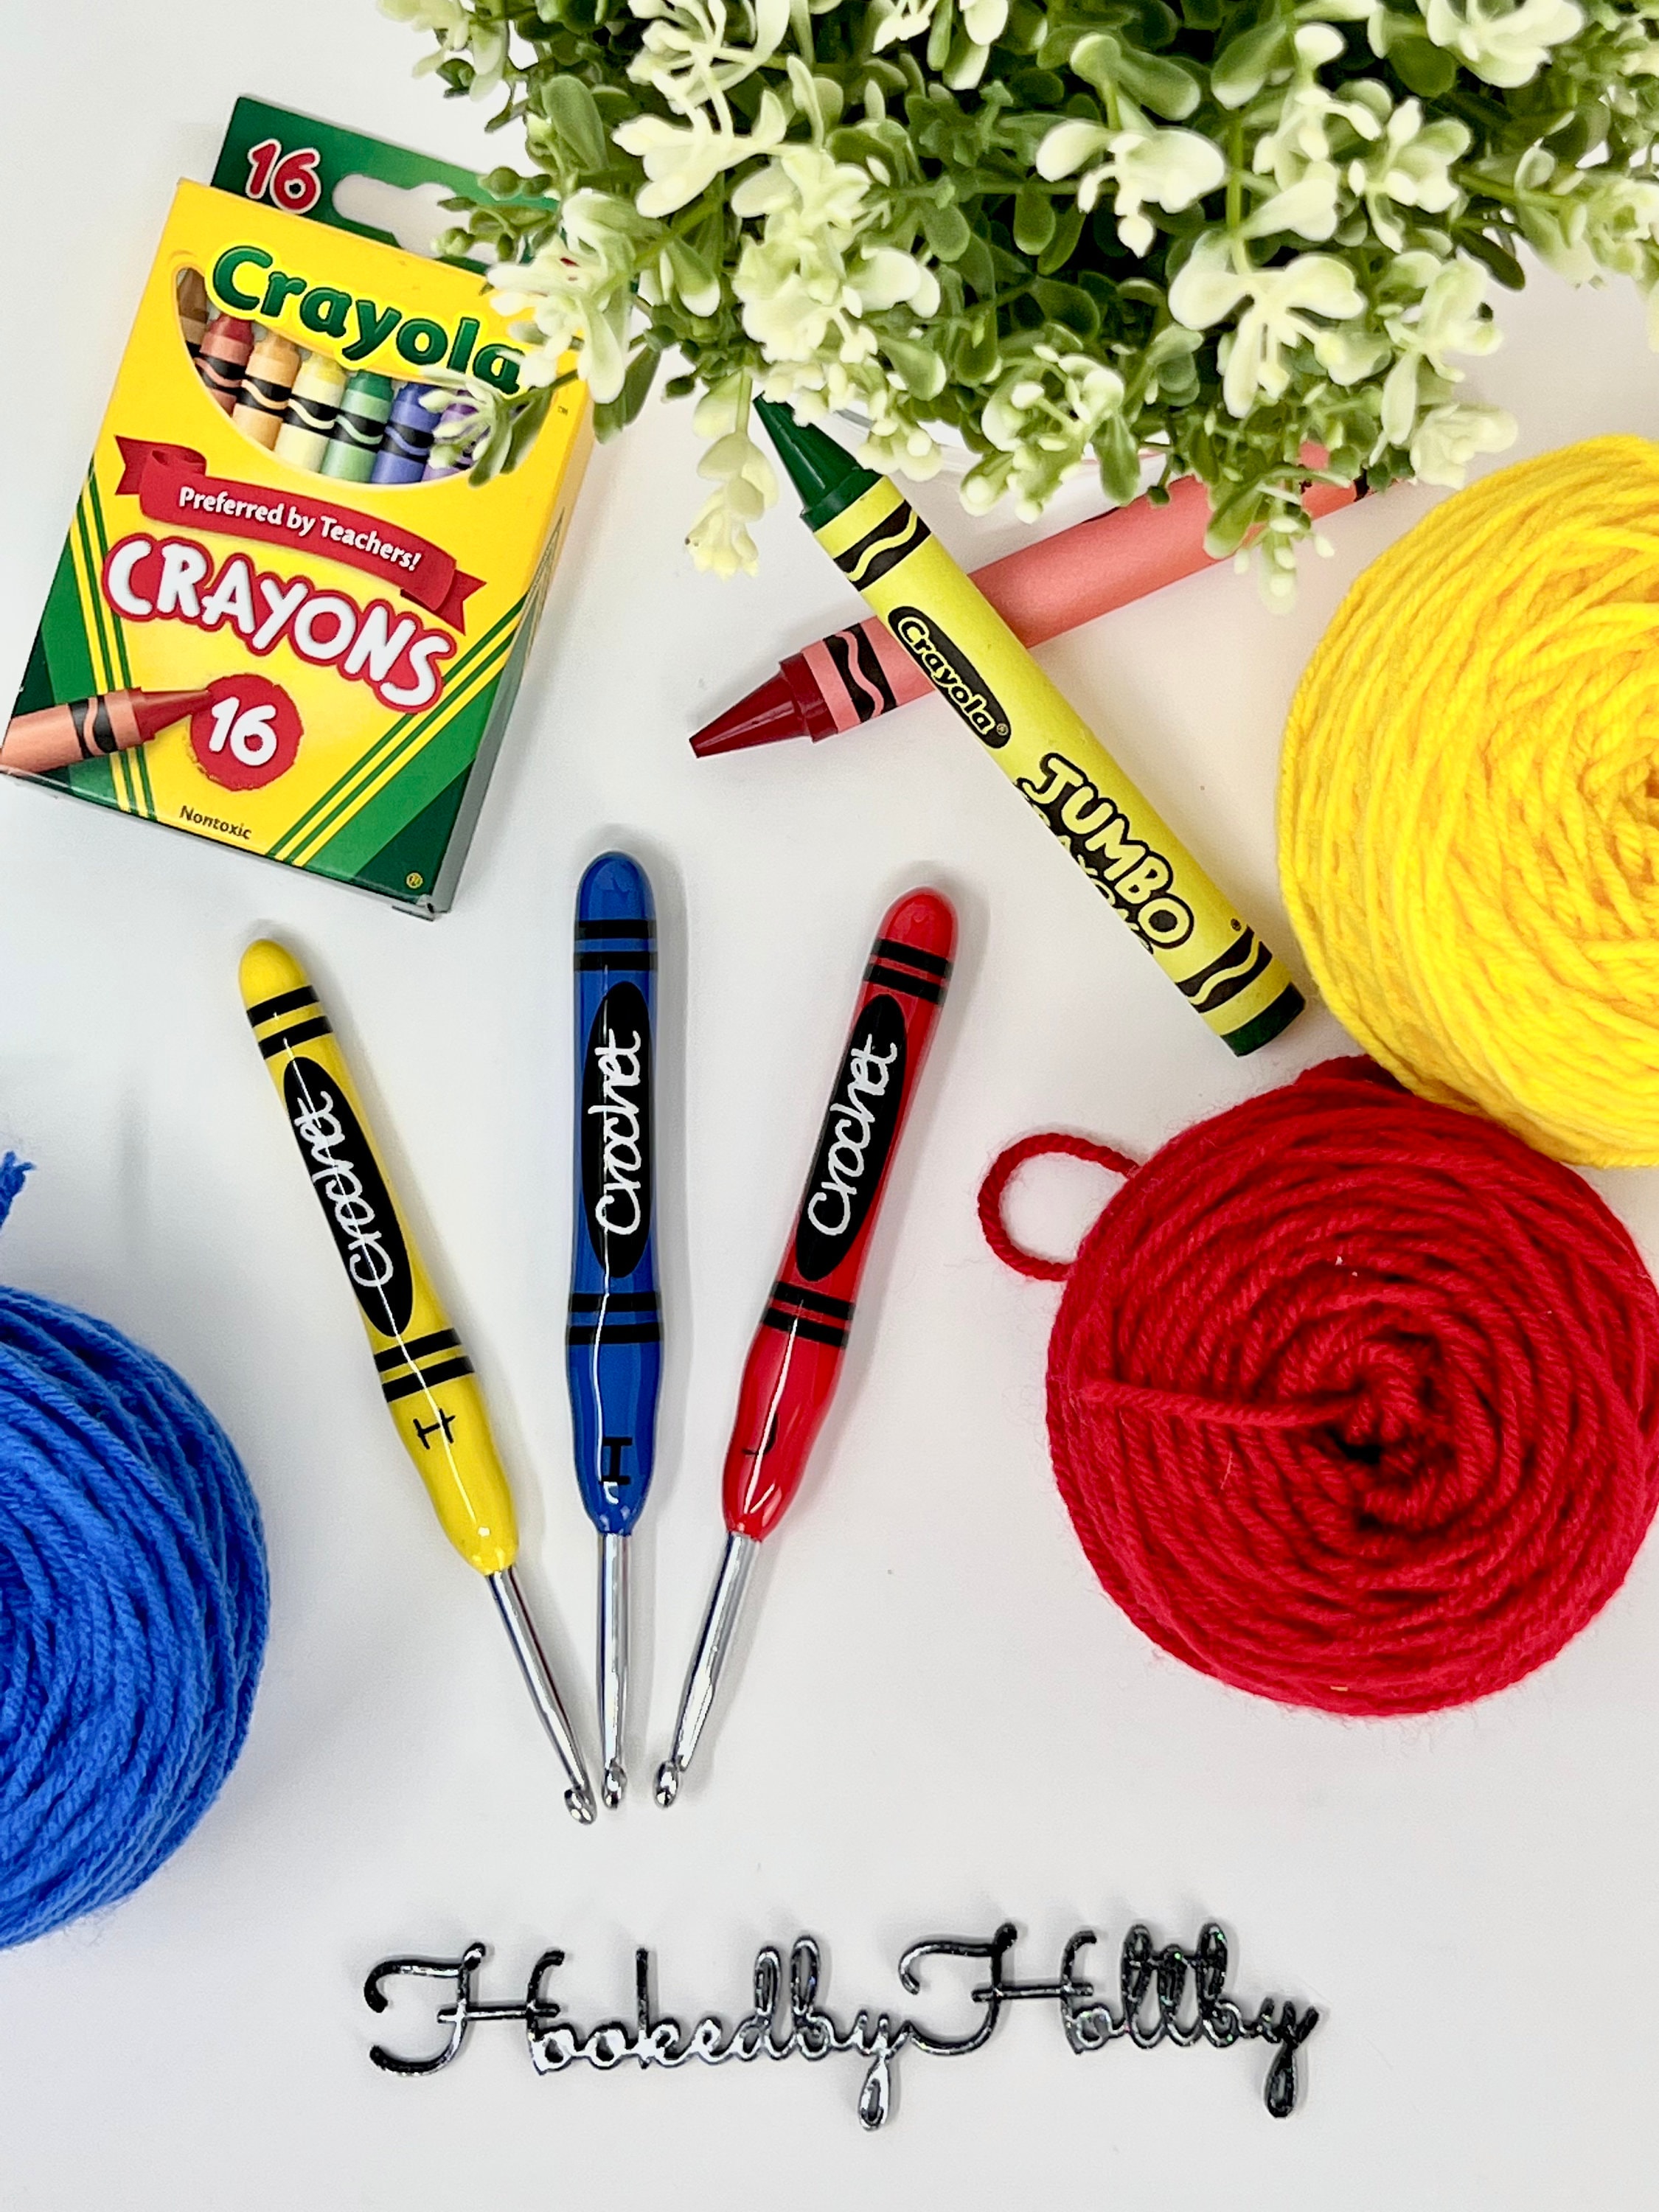 Crayon Crochet Hooks, Ergonomic Crochet Hooks, Hooked by Holtby